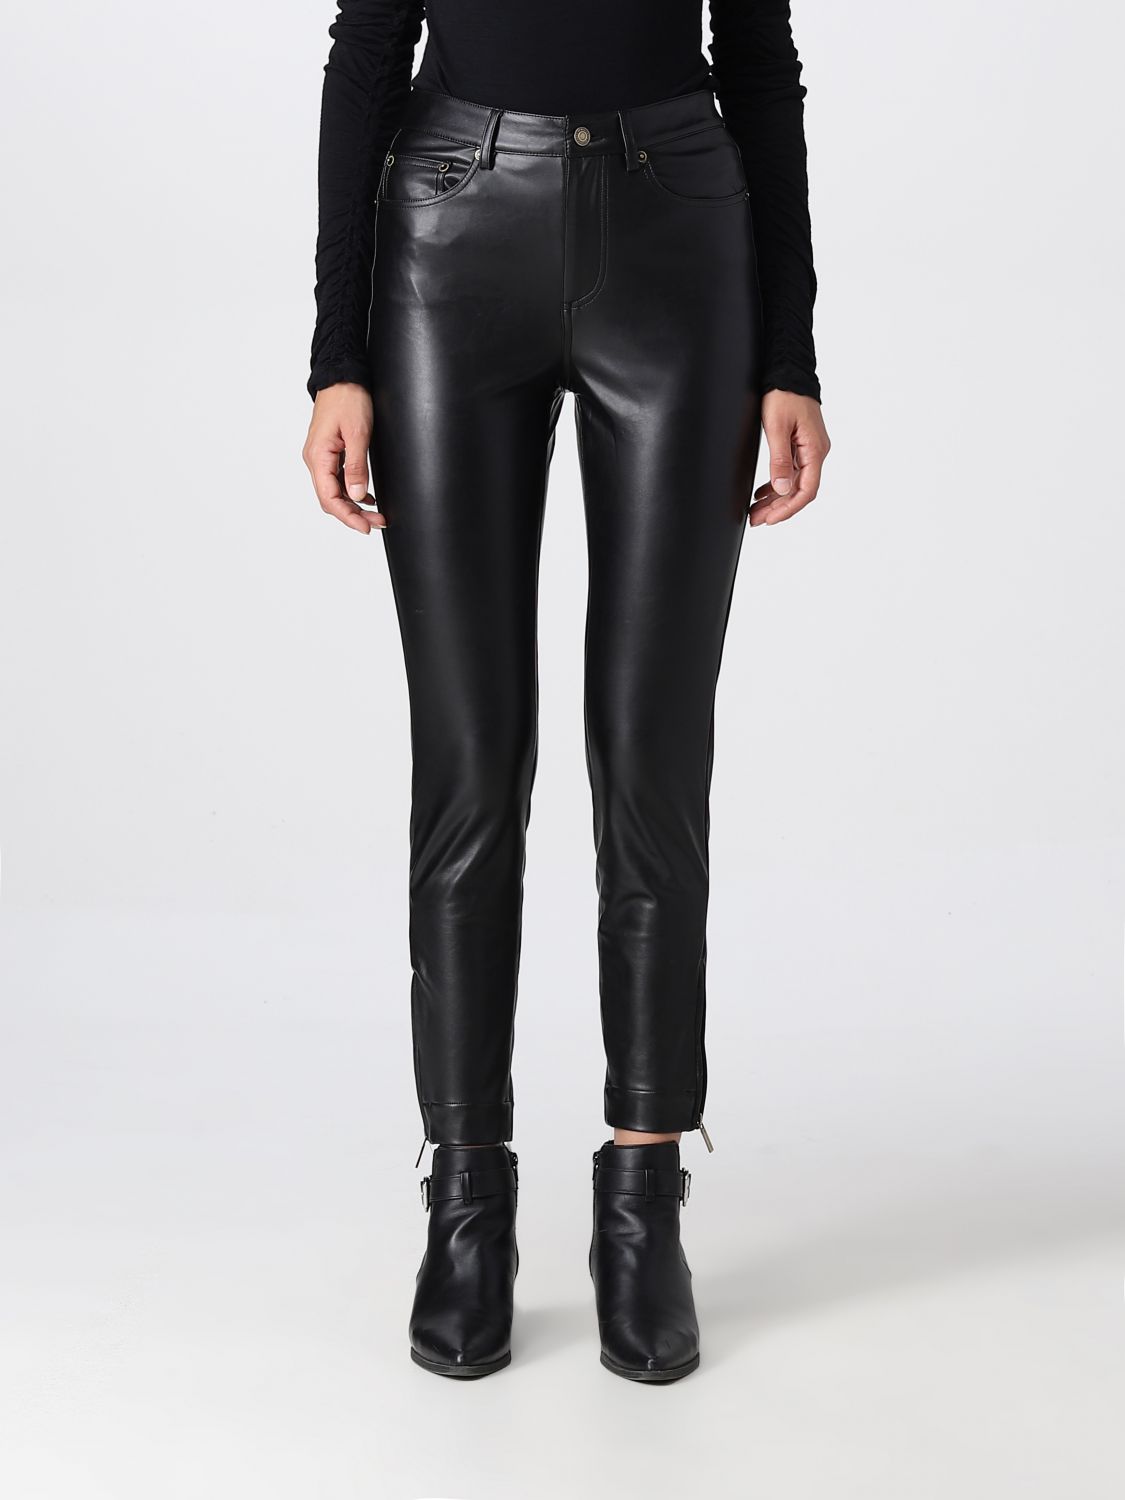 Michael Kors Outlet: pants for woman - Black | Michael Kors pants ...